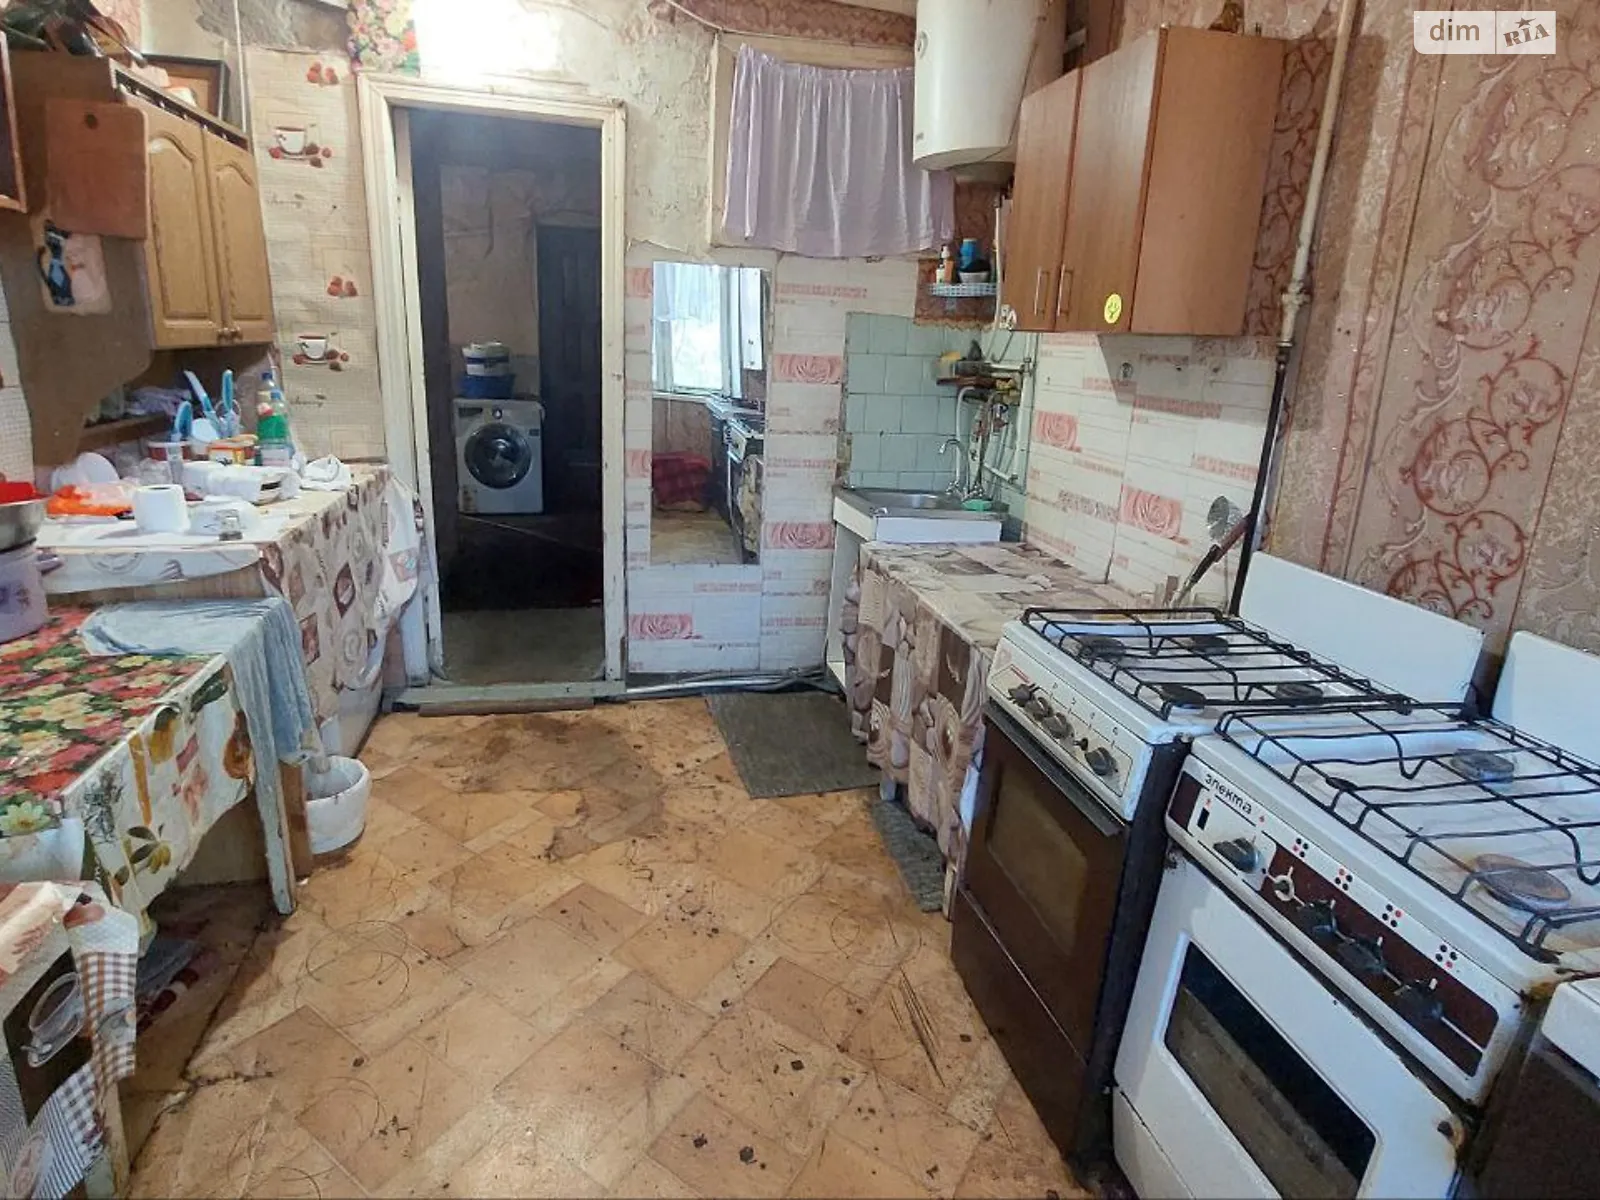 Продается комната 25 кв. м в Одессе, цена: 6000 $ - фото 1